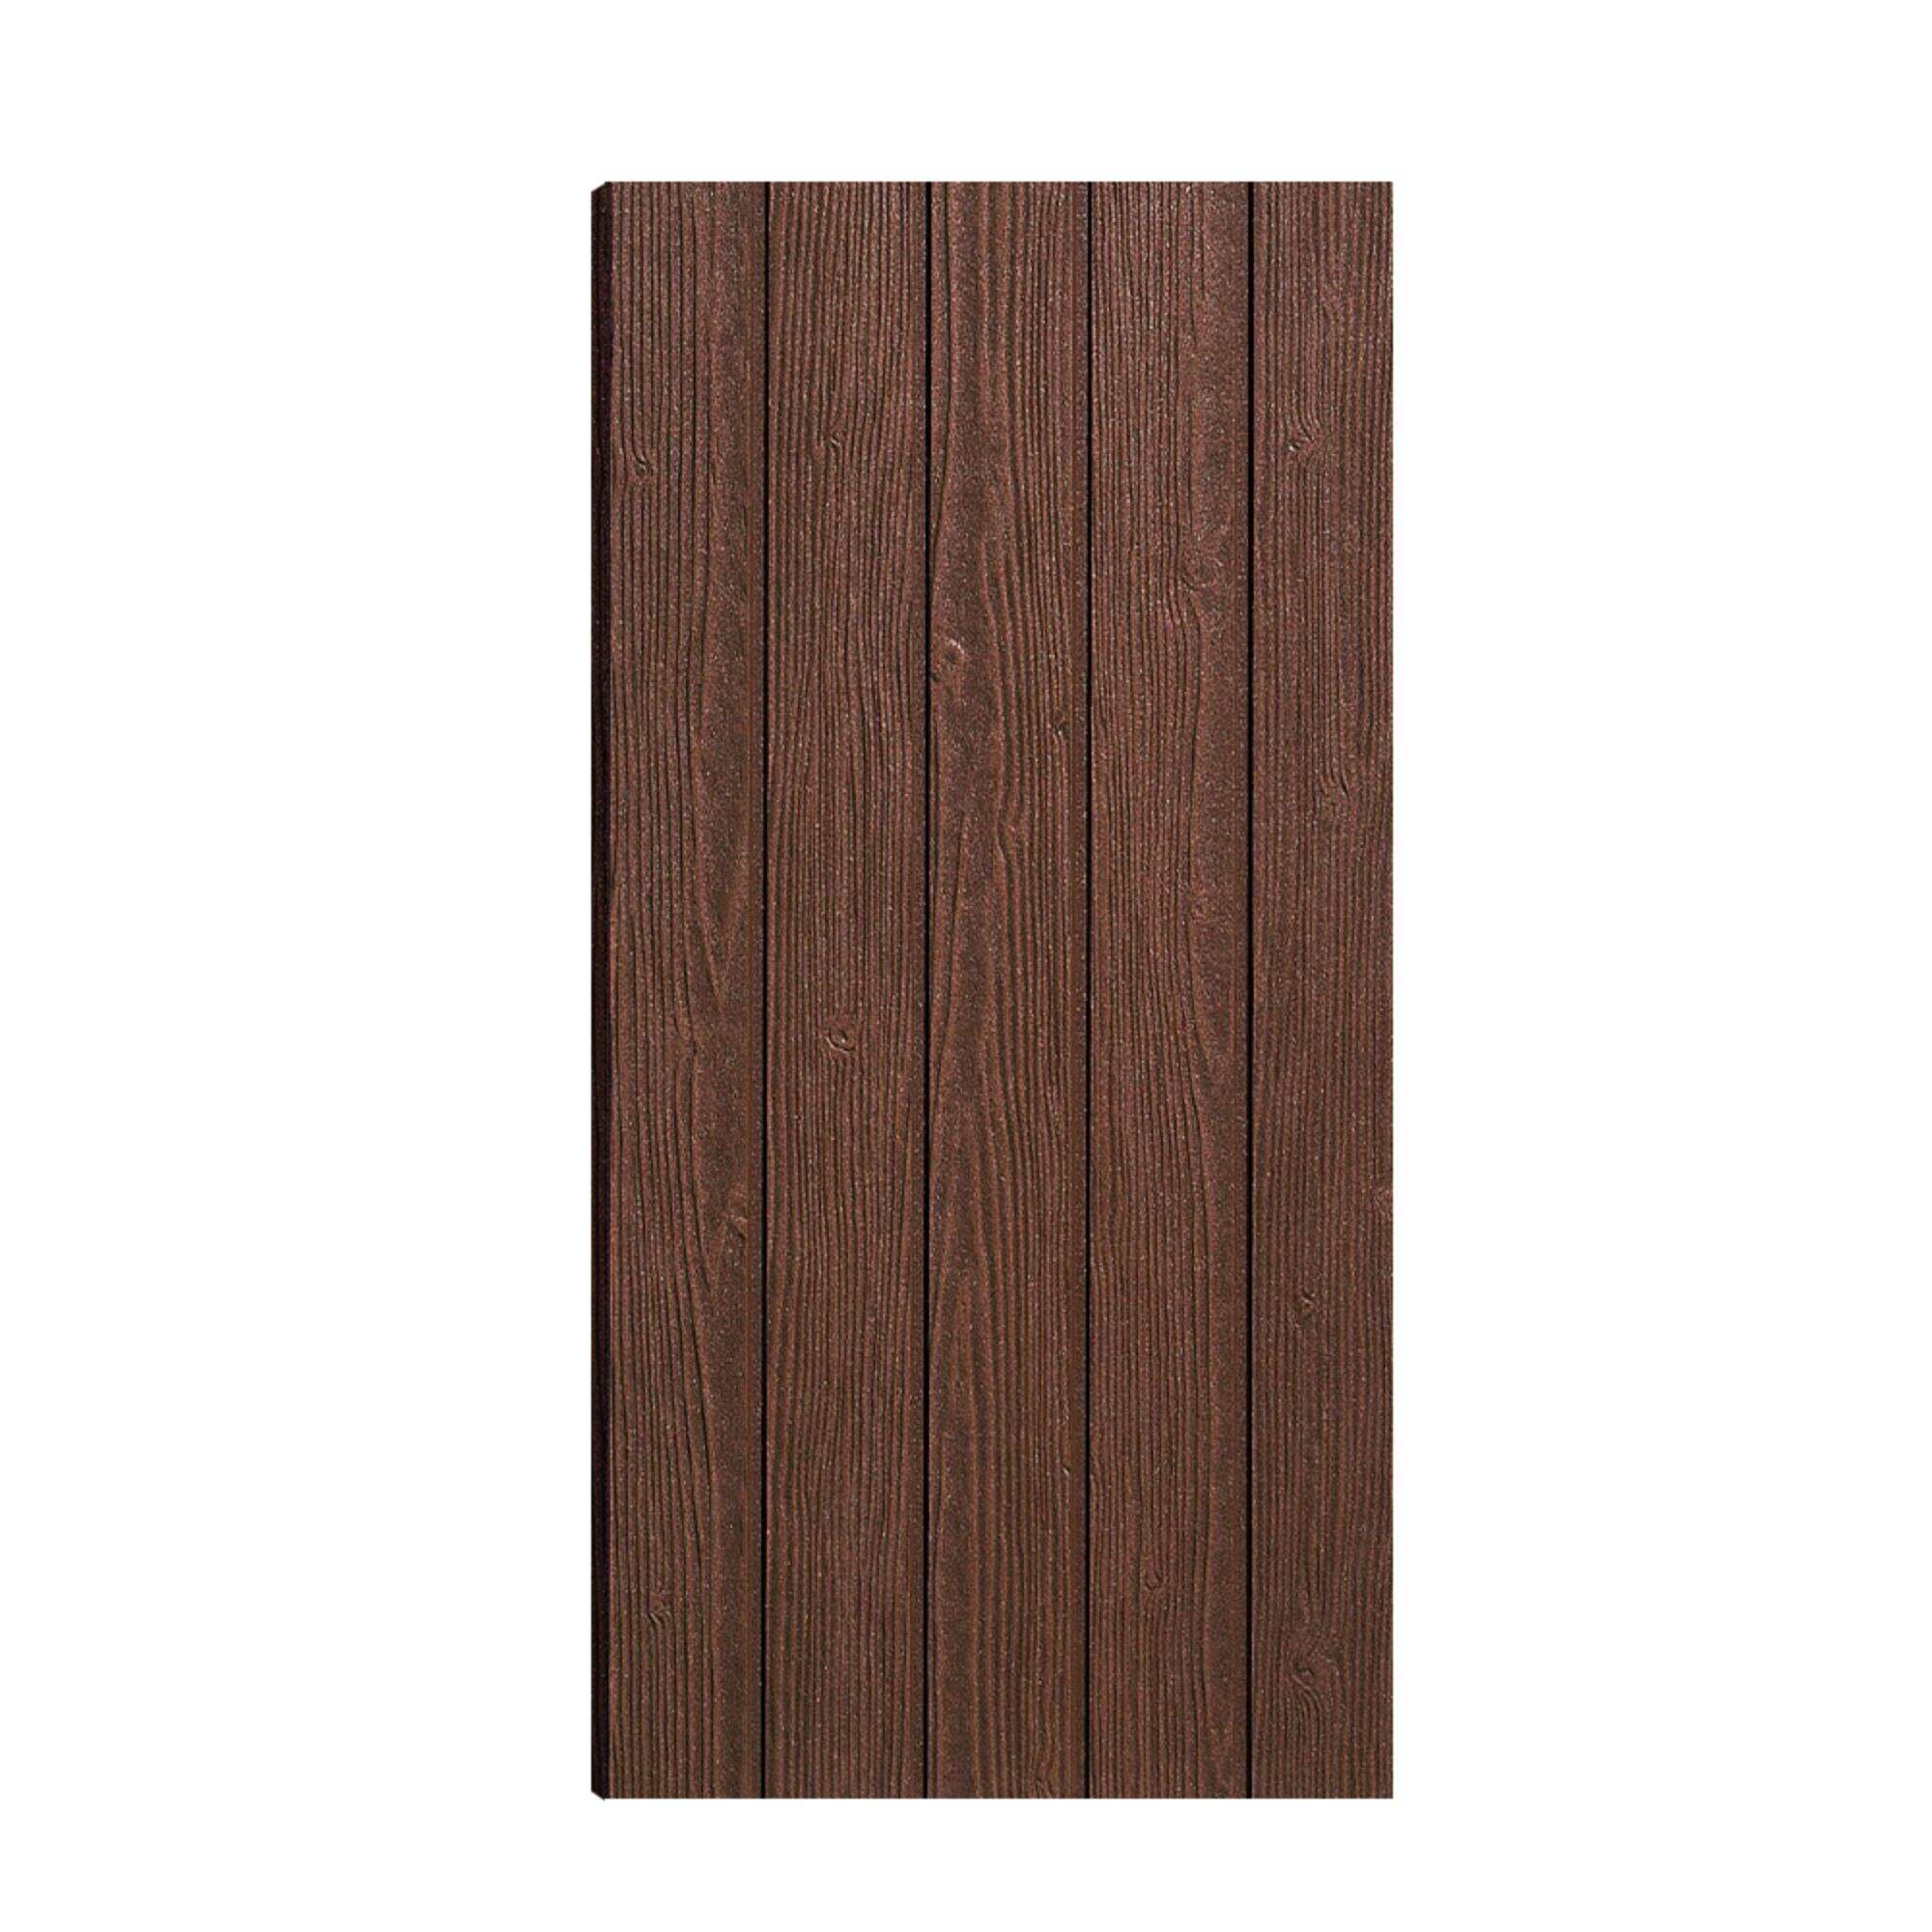 KTC Exterior Panel Wood Grain 645259